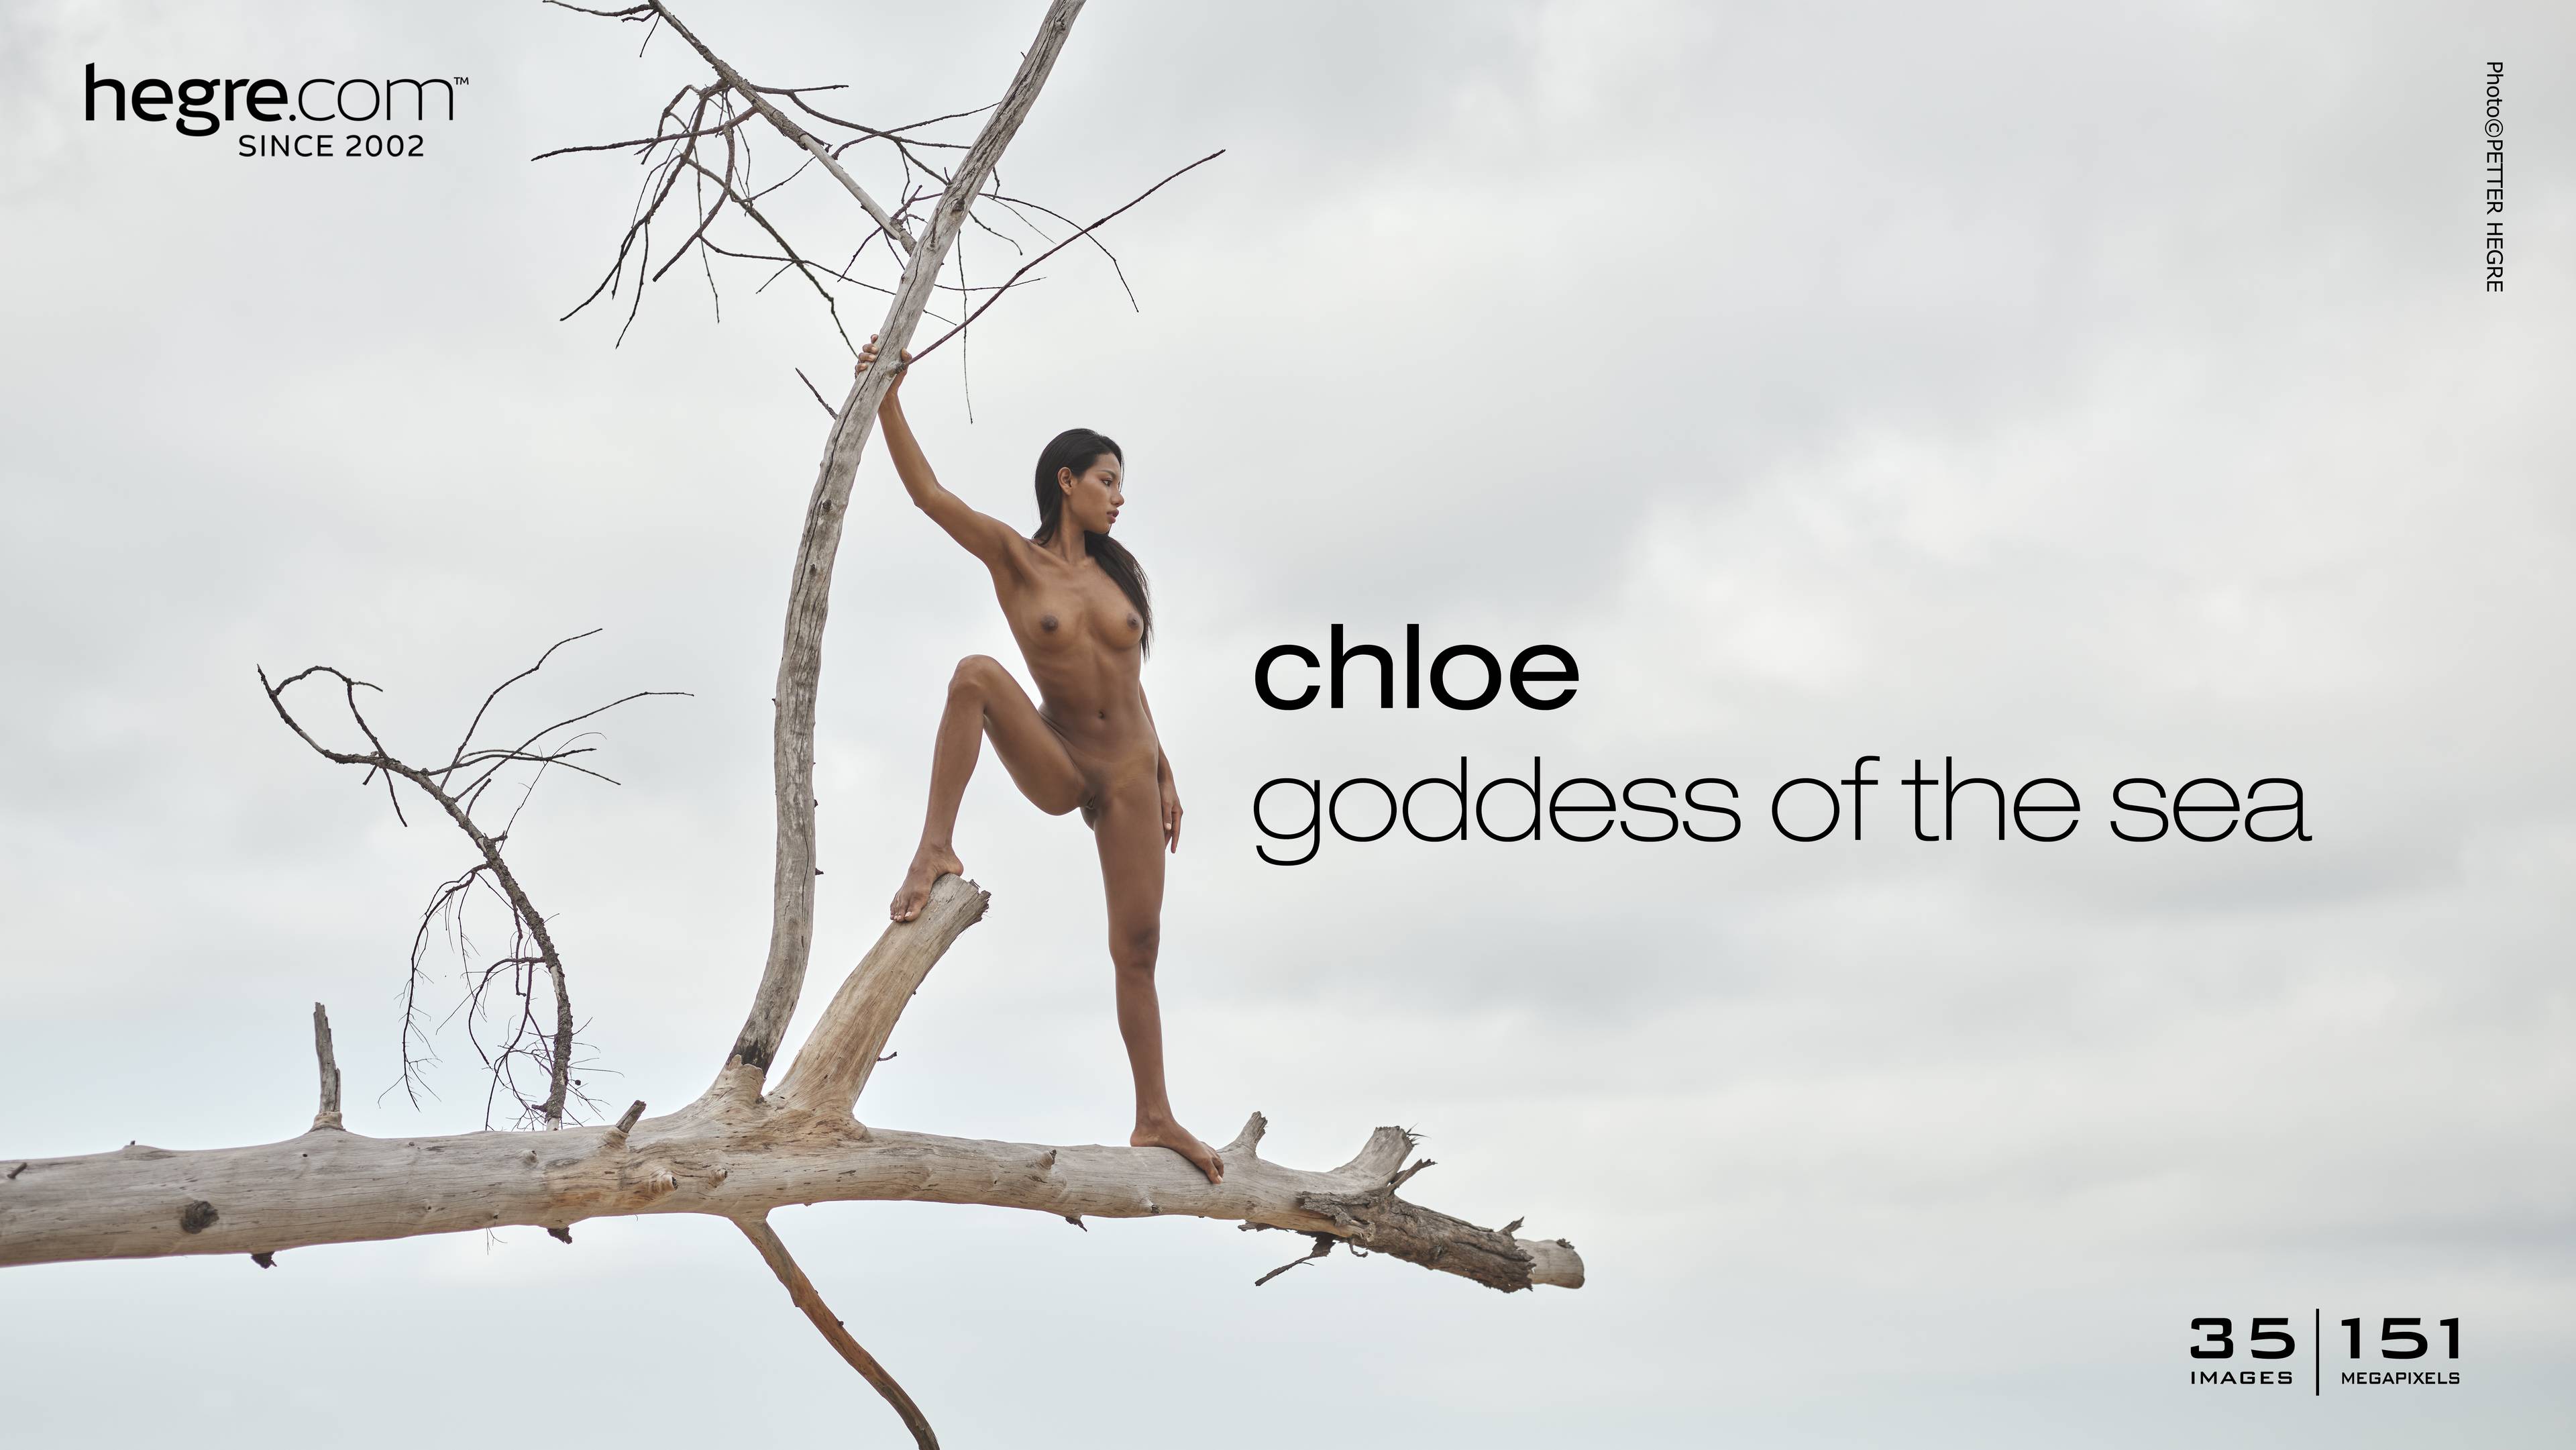 chloe goddess of the sea board